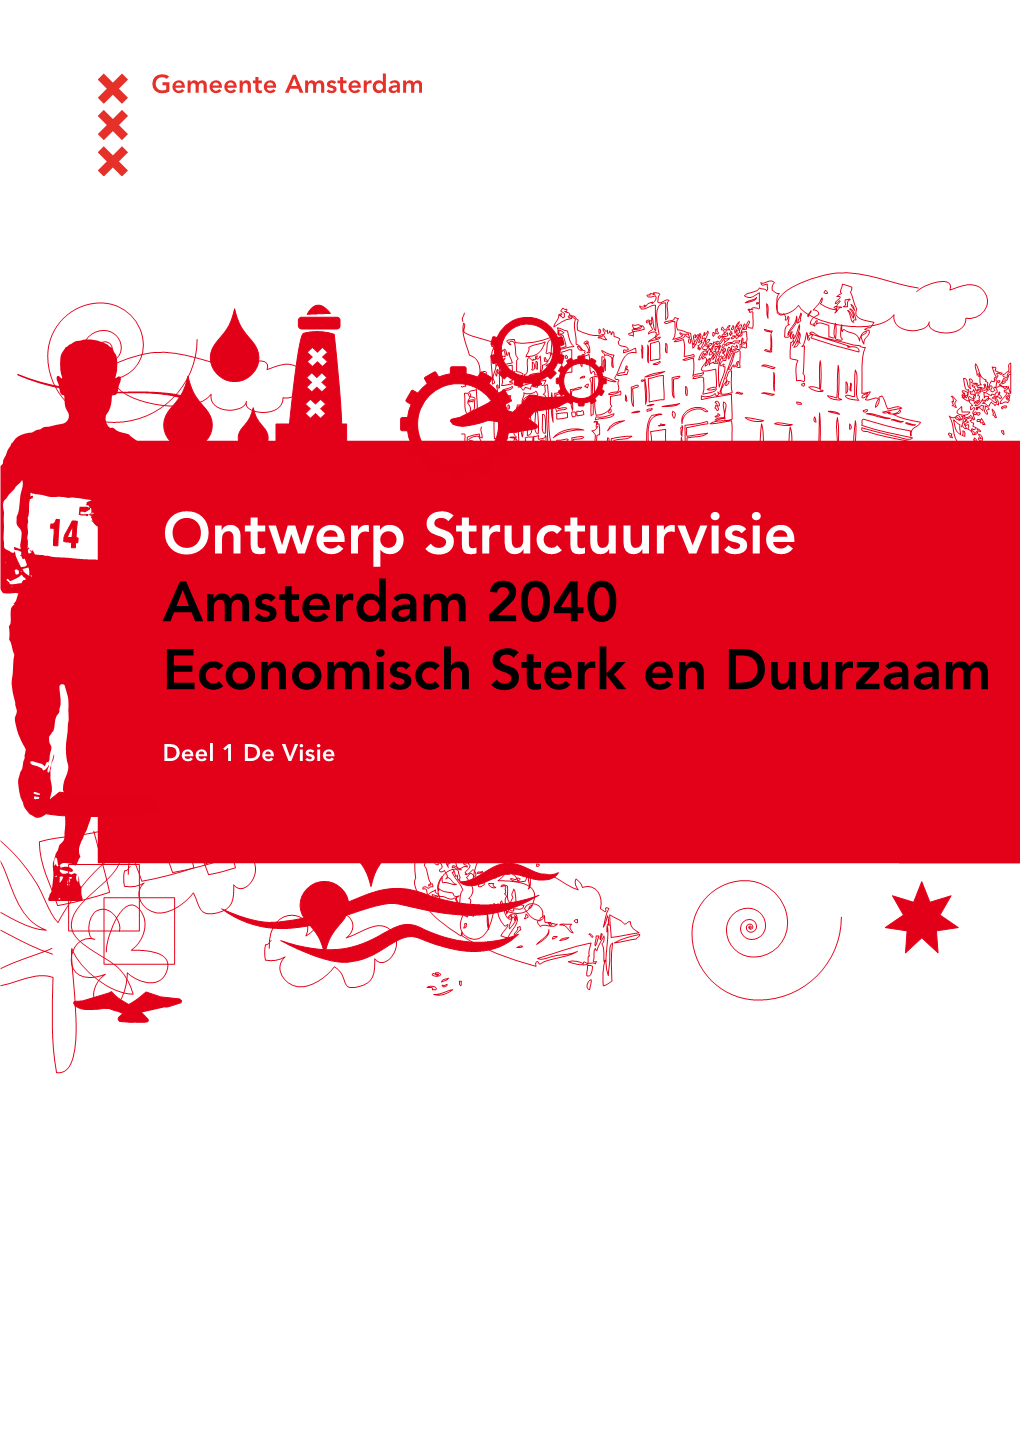 Ontwerp Structuurvisie Amsterdam 2040 Economisch Sterk En Duurzaam